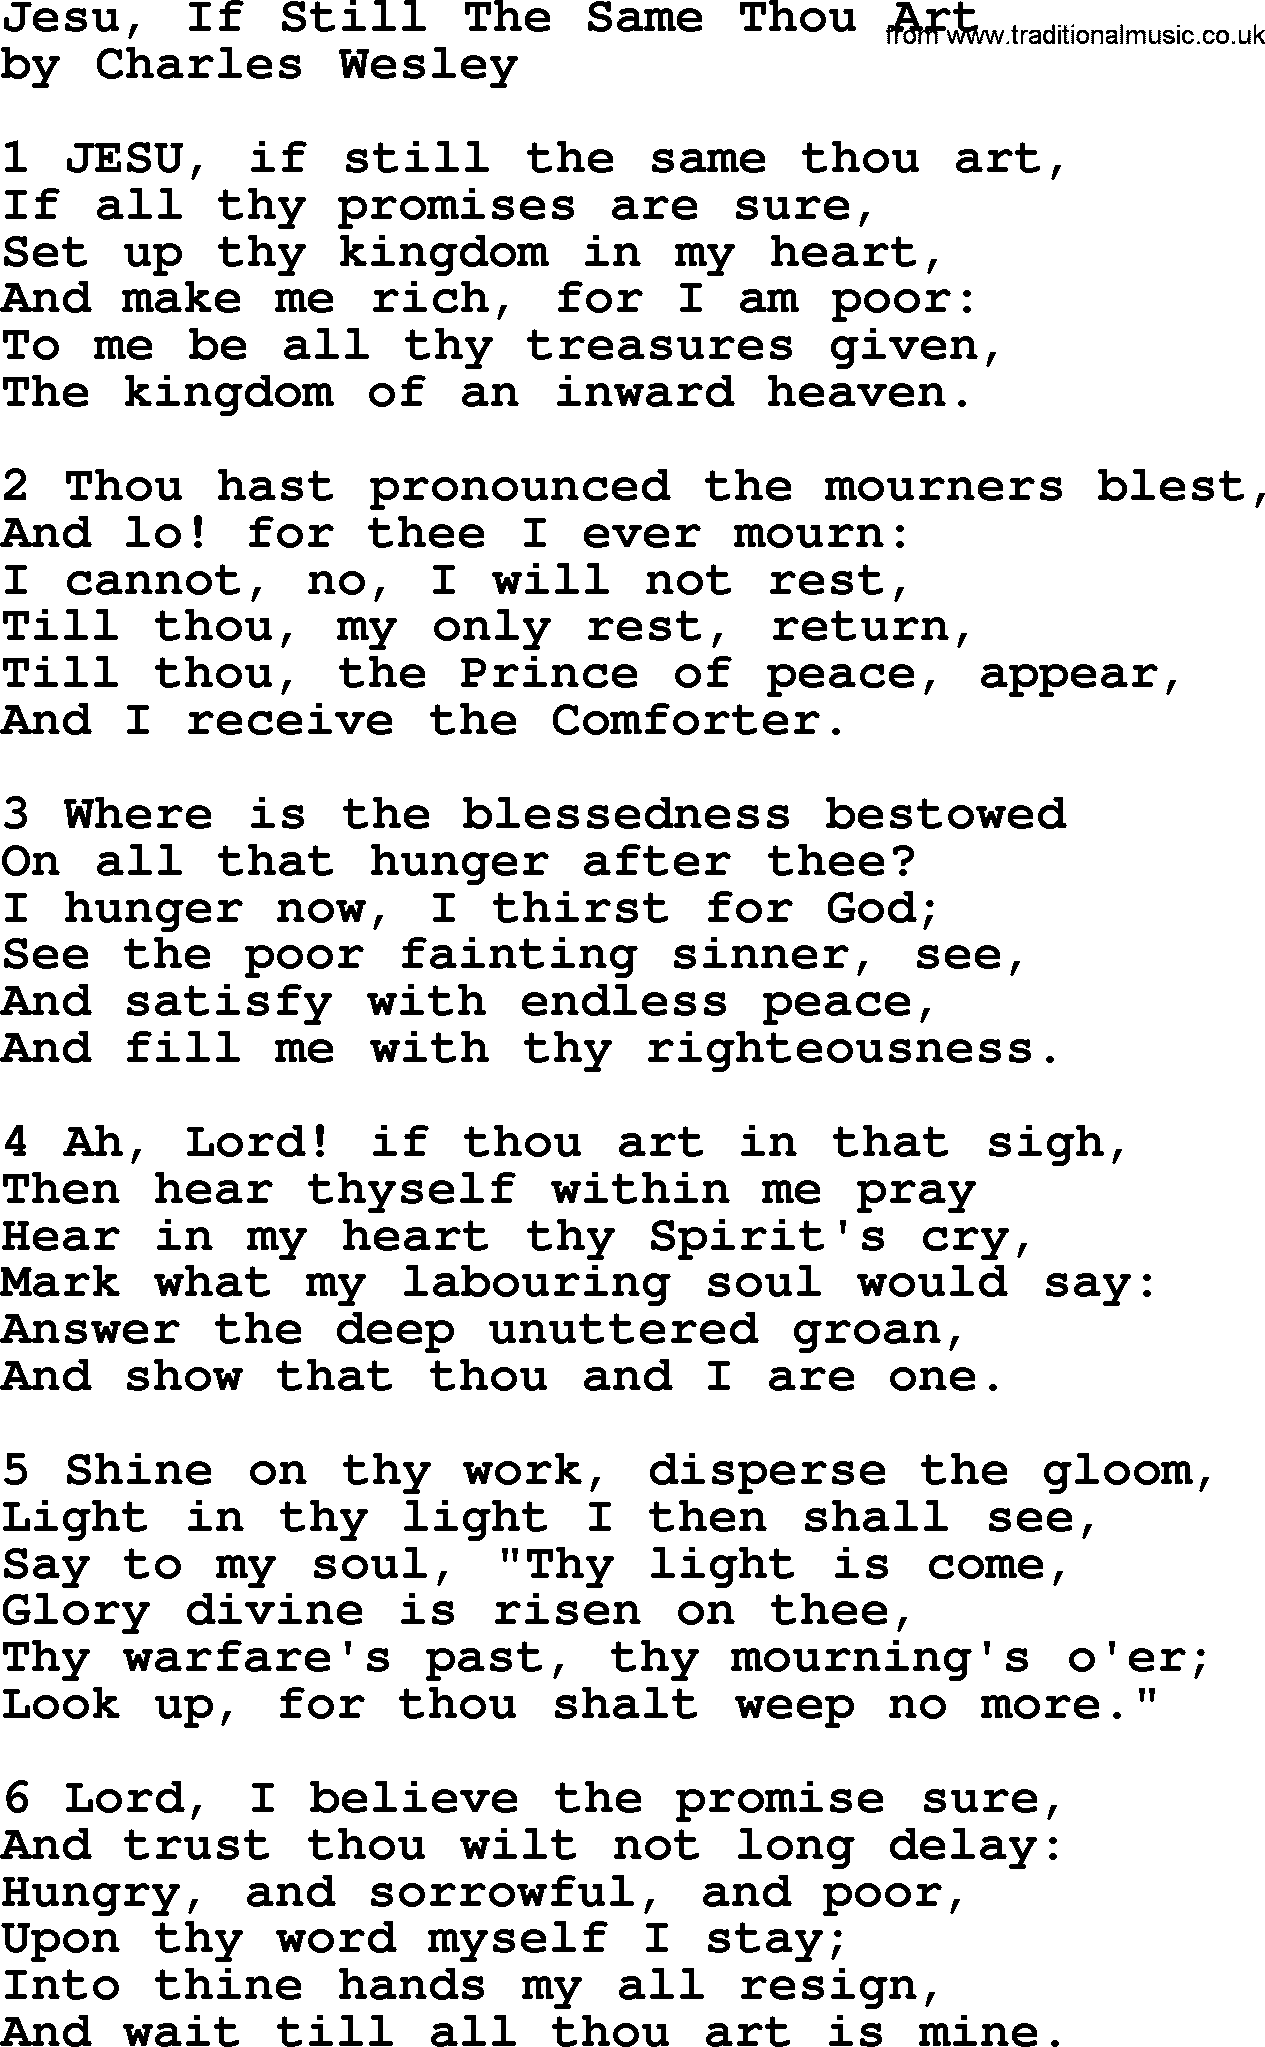 Charles Wesley hymn: Jesu, If Still The Same Thou Art, lyrics